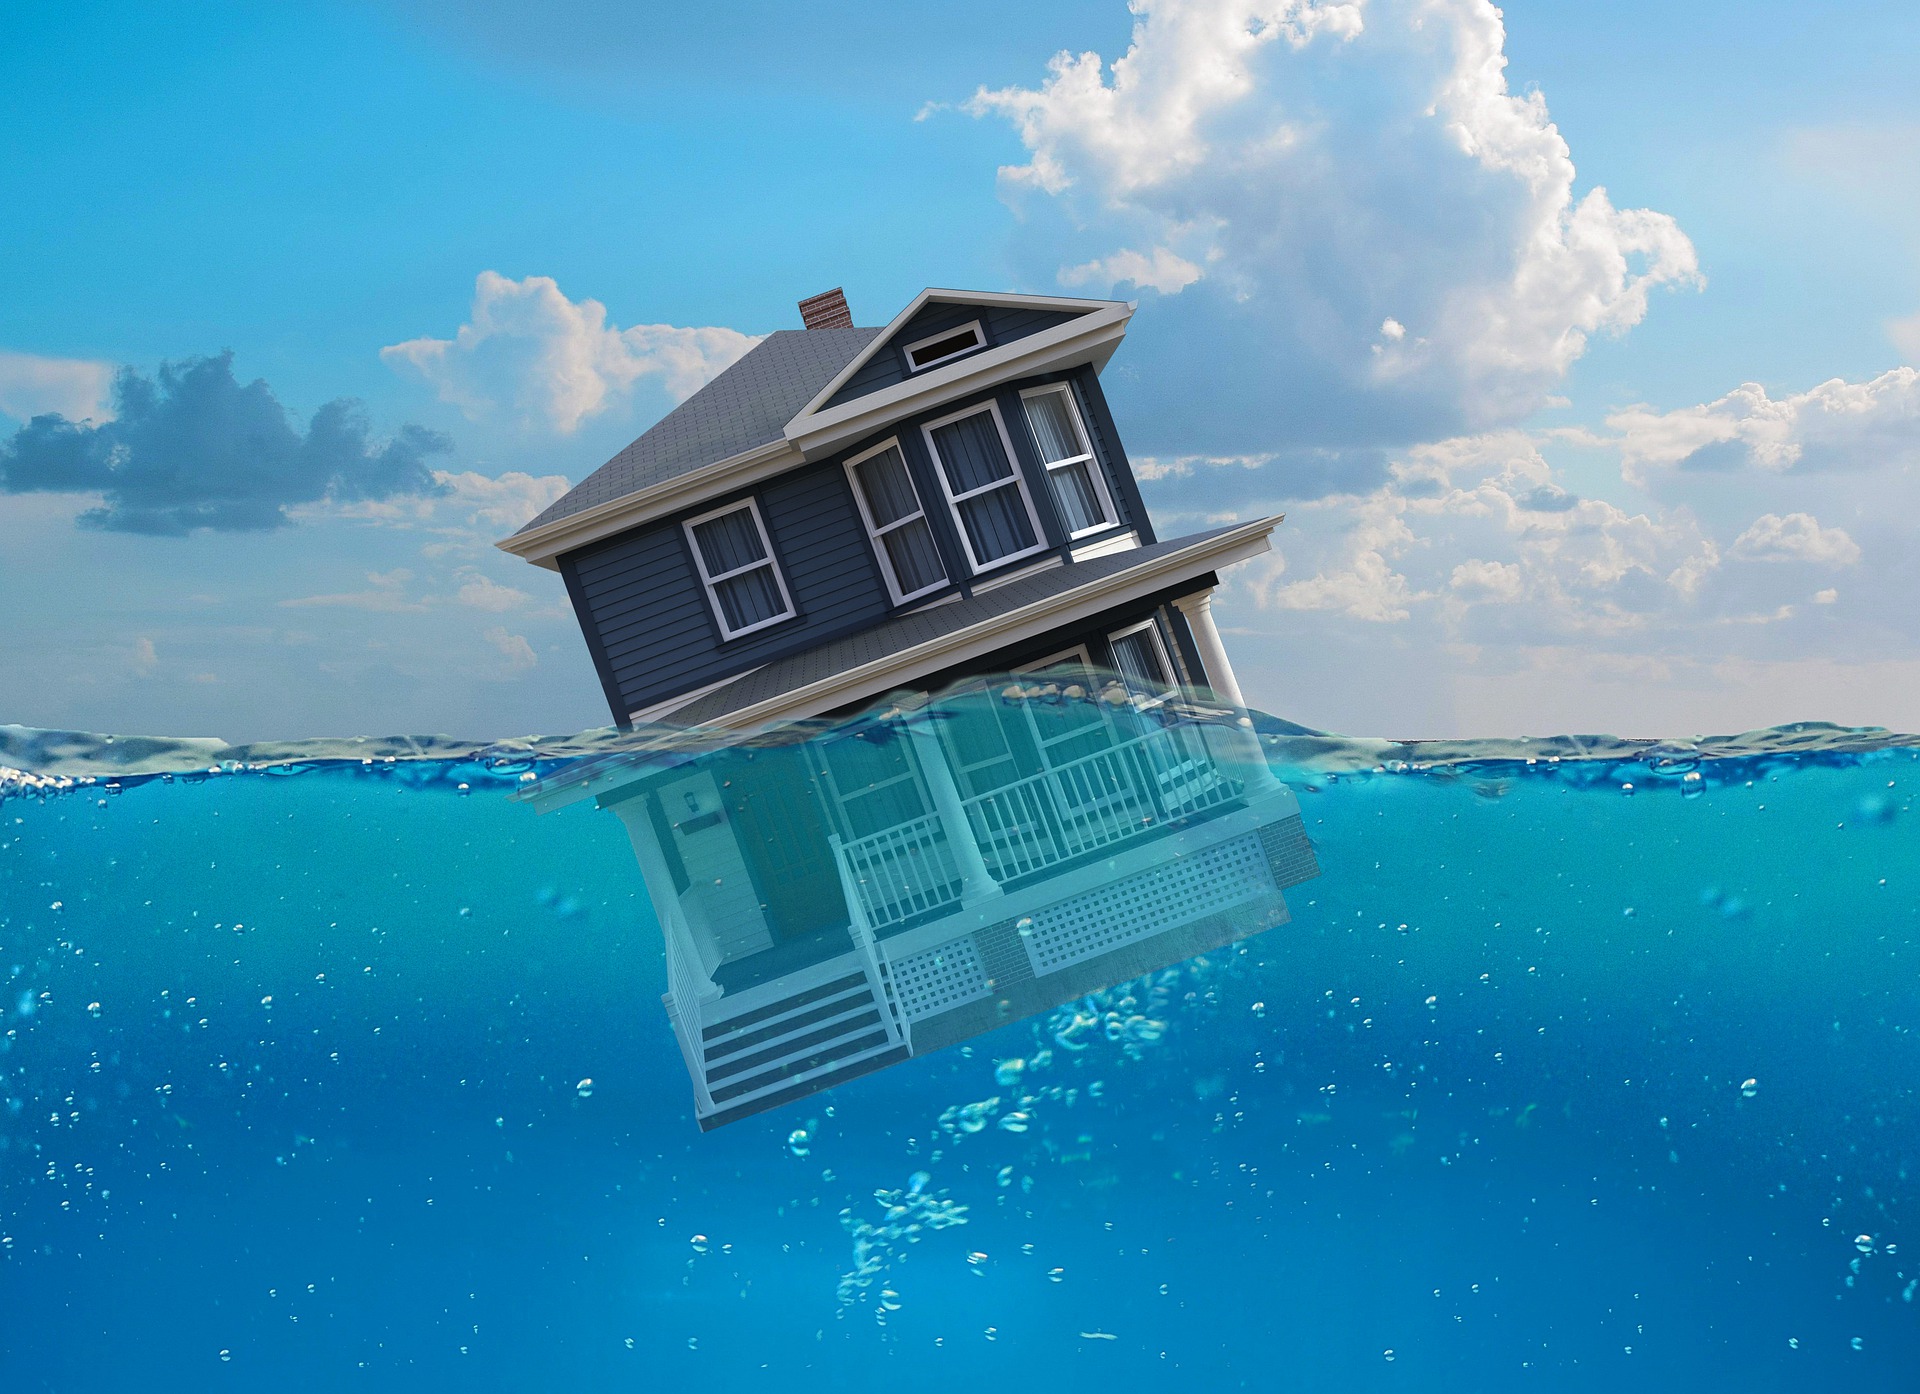 House Under Water